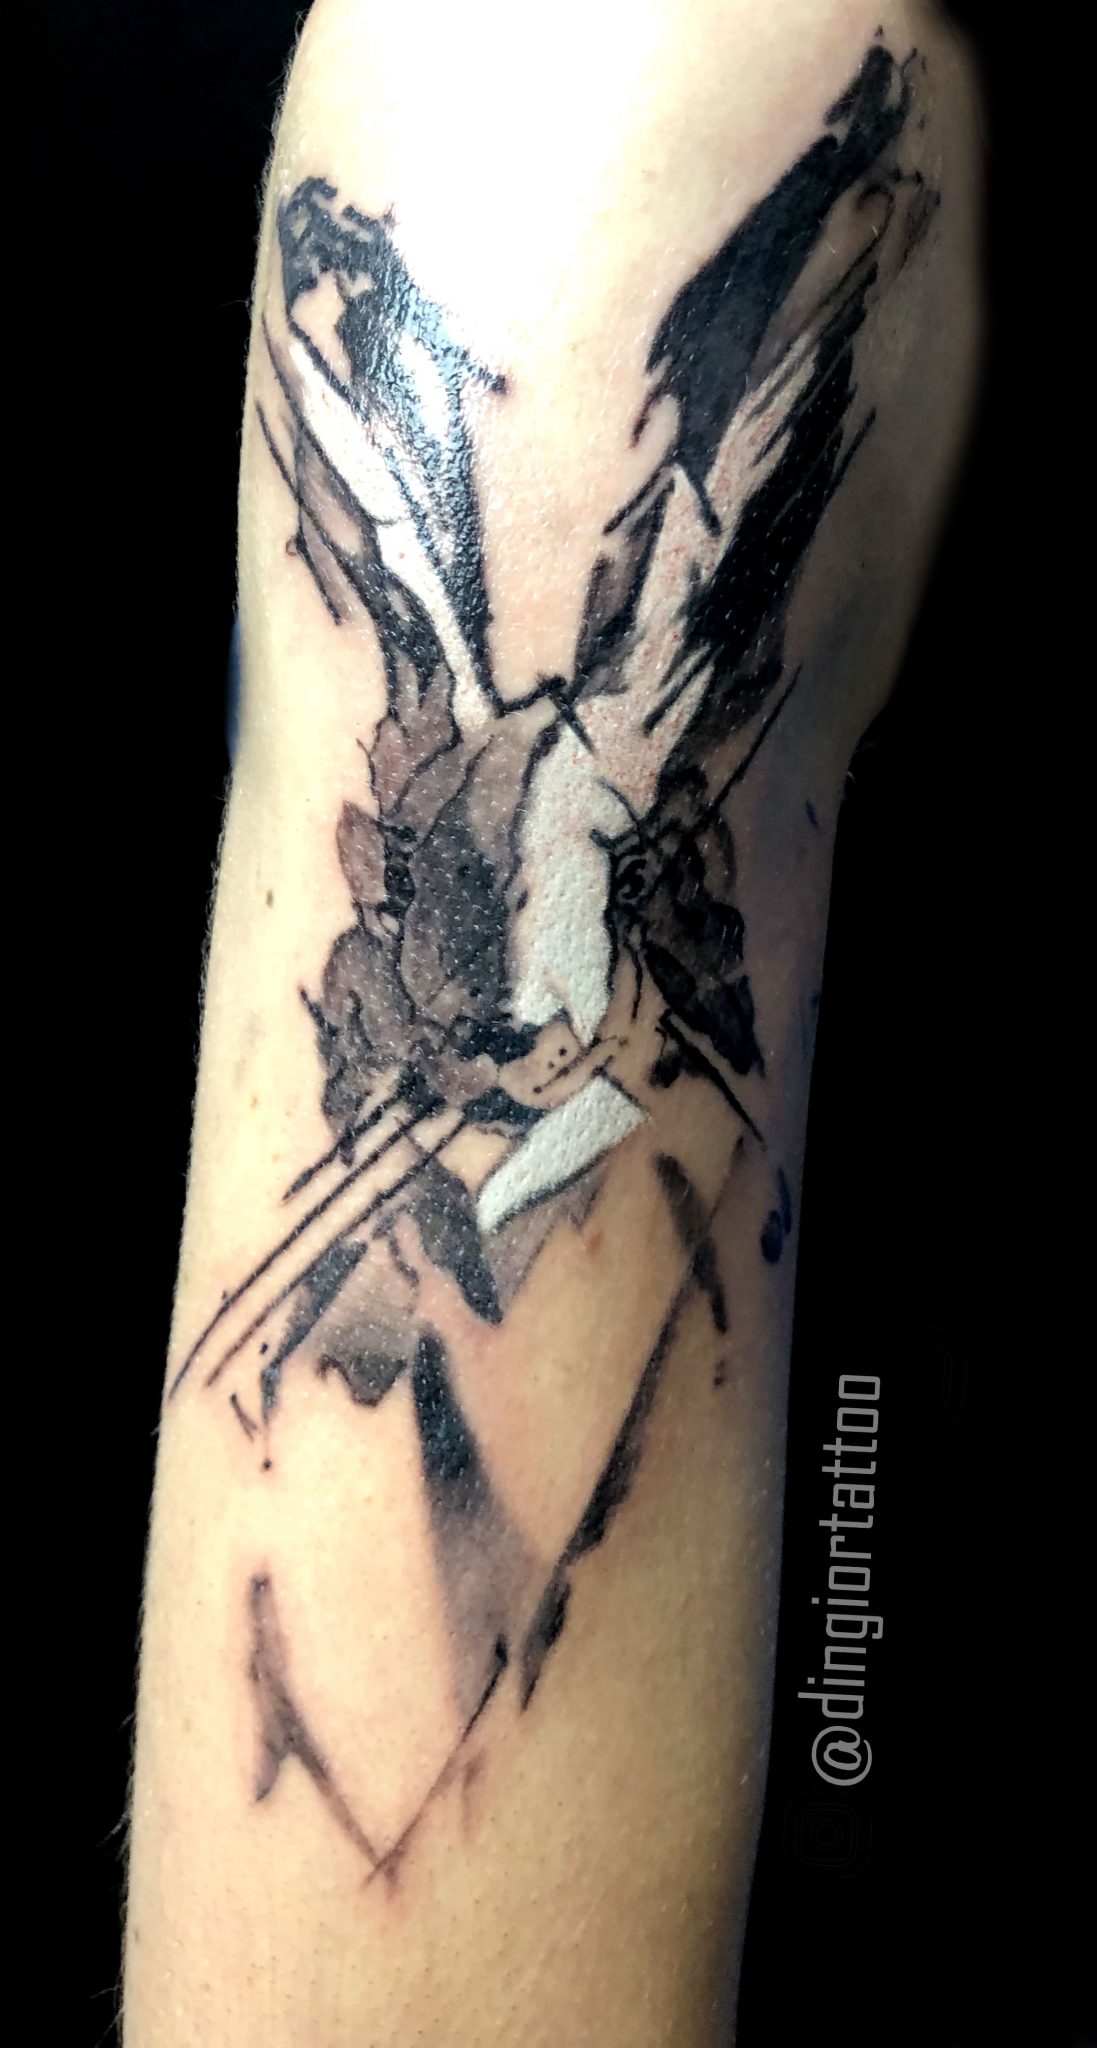 Tattoo Hare or Rabbit (Graphics)